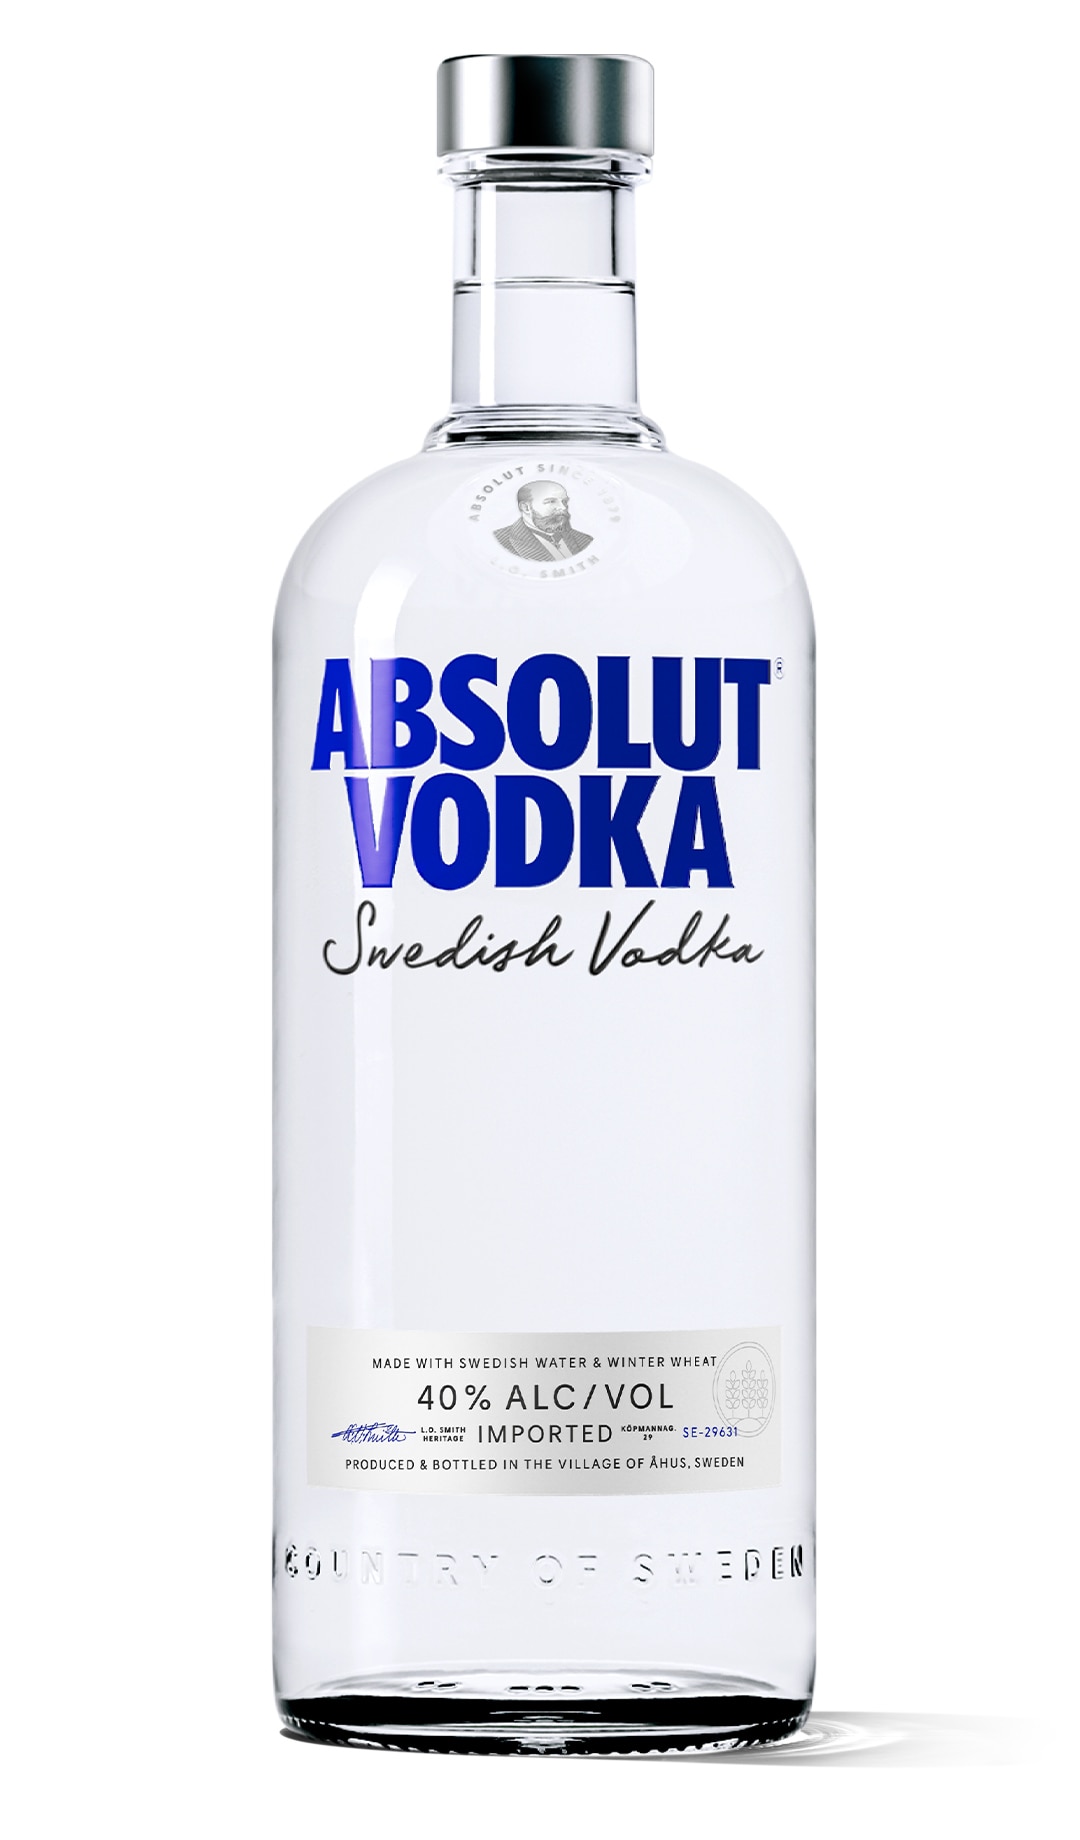 Absolut Vodka - Swedish Vodka